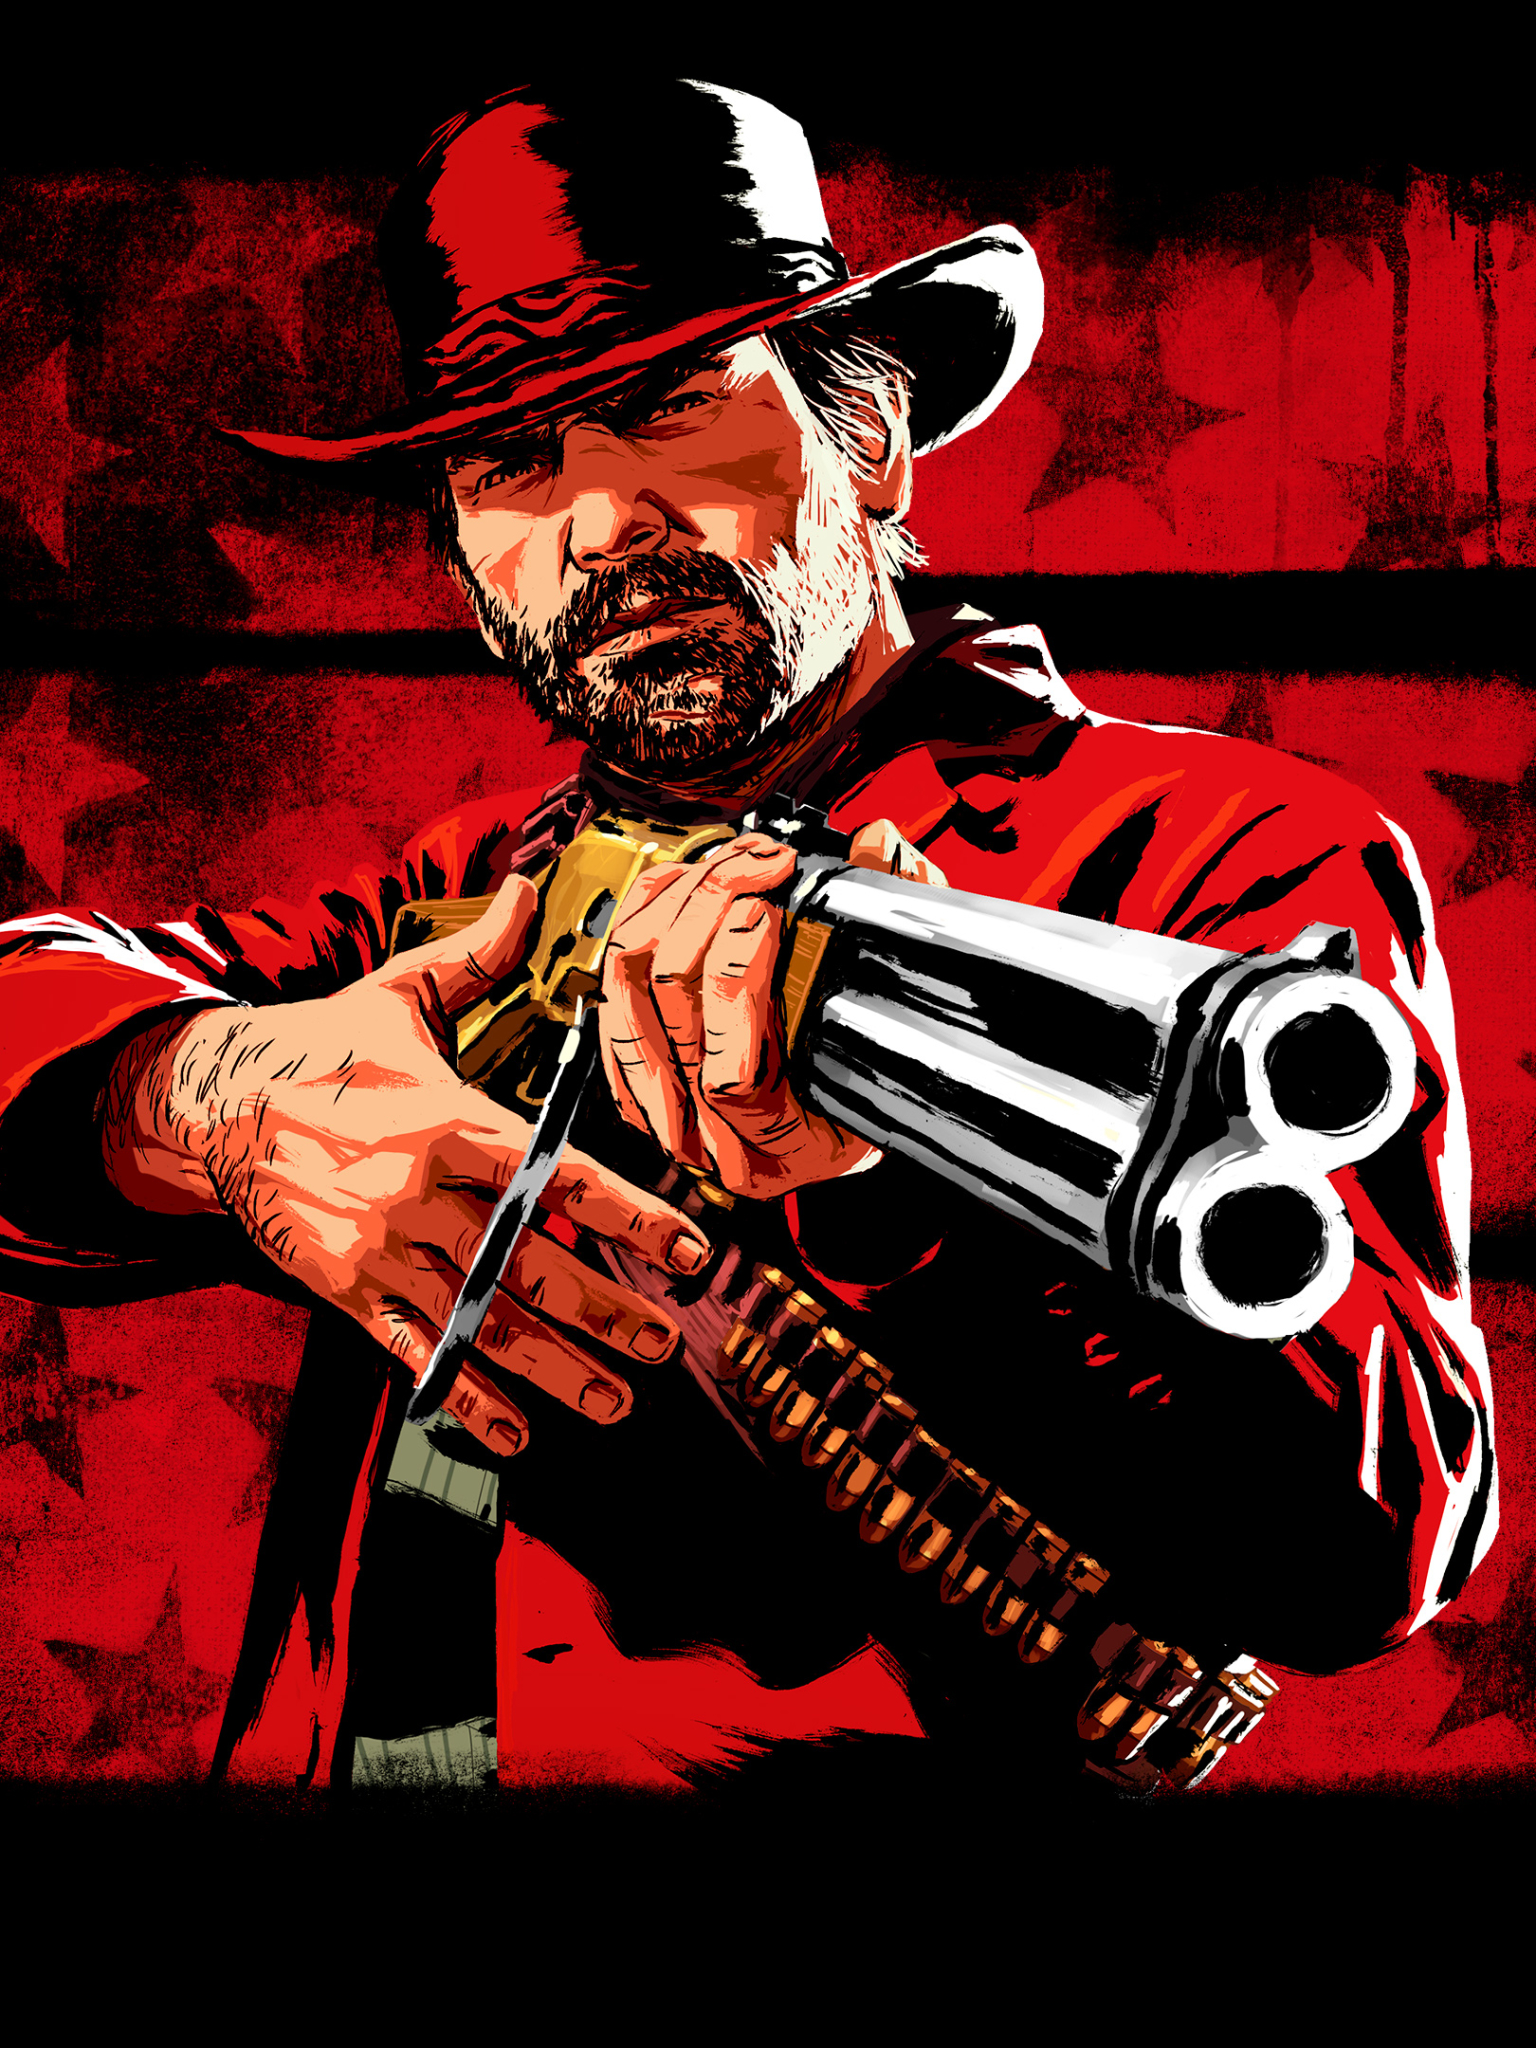 Wallpaper  Red Dead Redemption Red Dead Redemption 2 Arthur Morgan  Rockstar Games 1920x1080  zakspix64  2212617  HD Wallpapers  WallHere